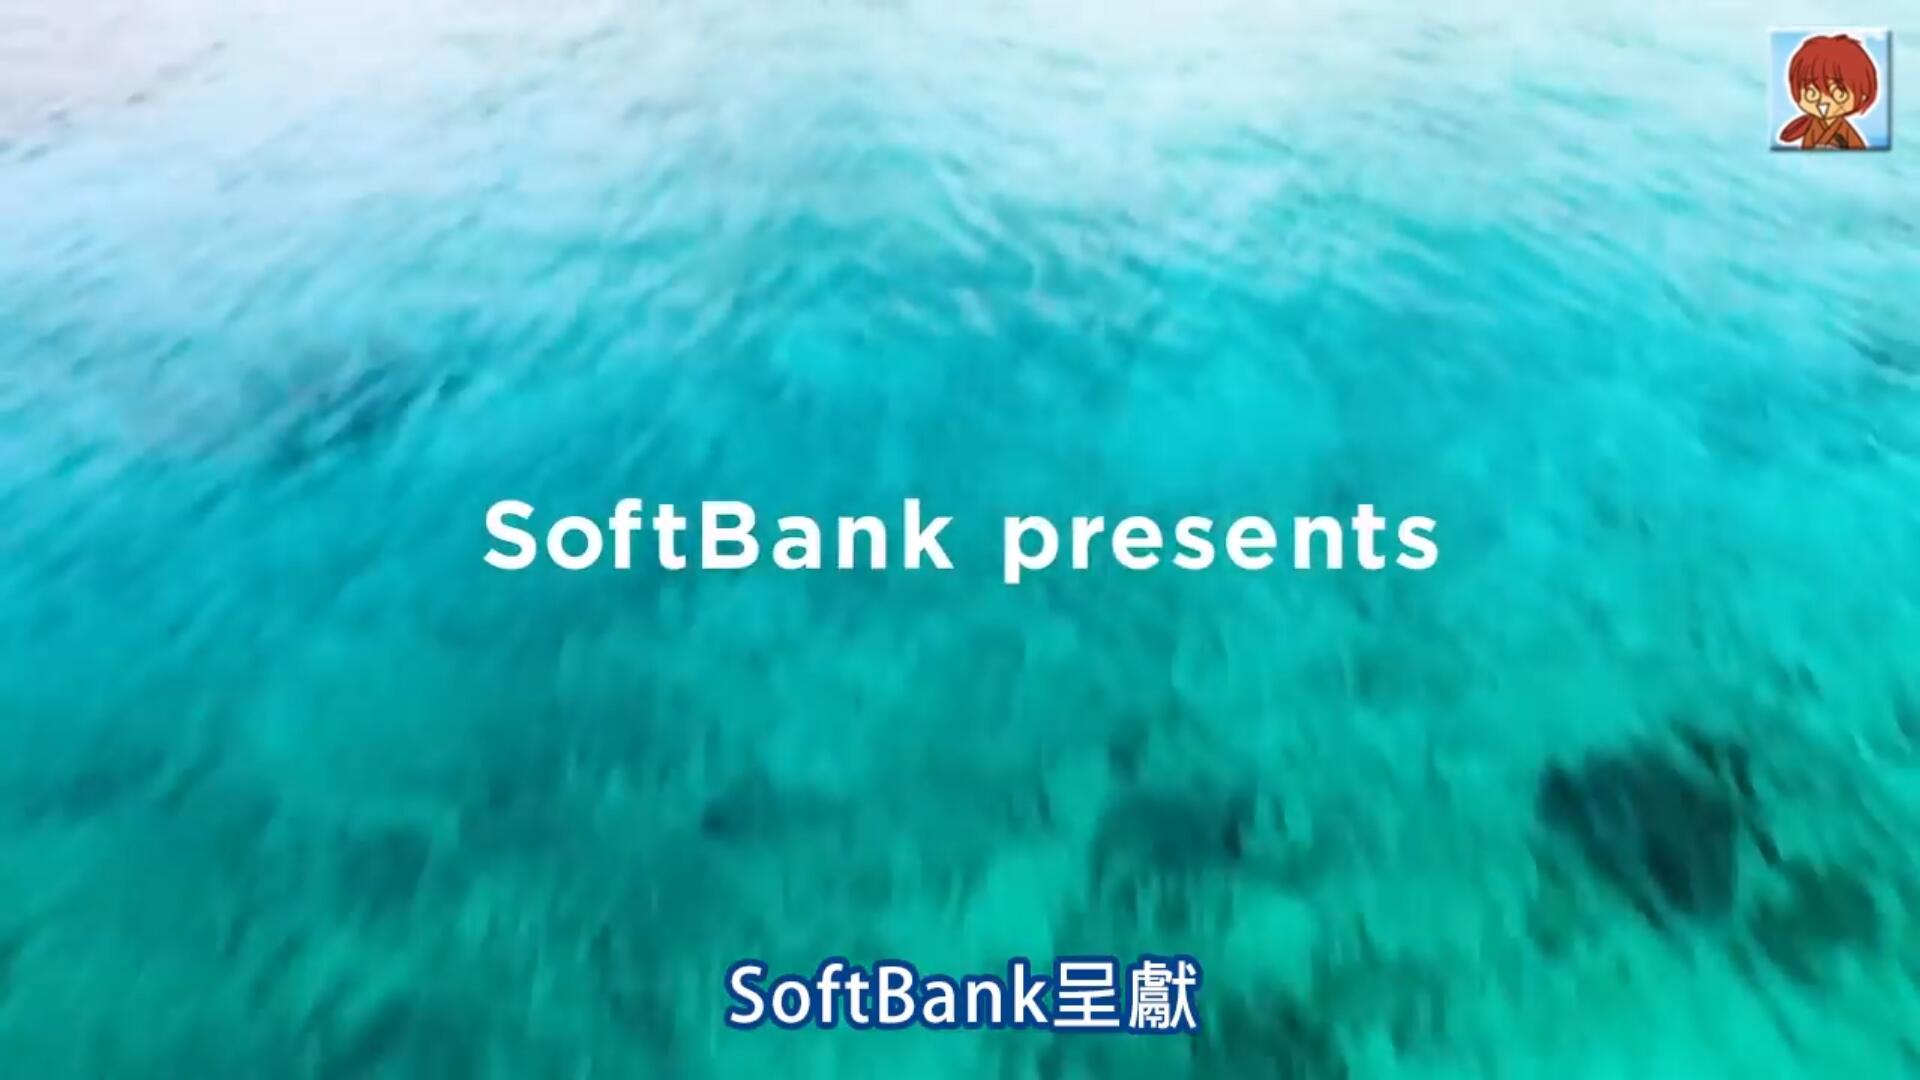 SoftBank创意广告拉近家人距离带來无限感动 